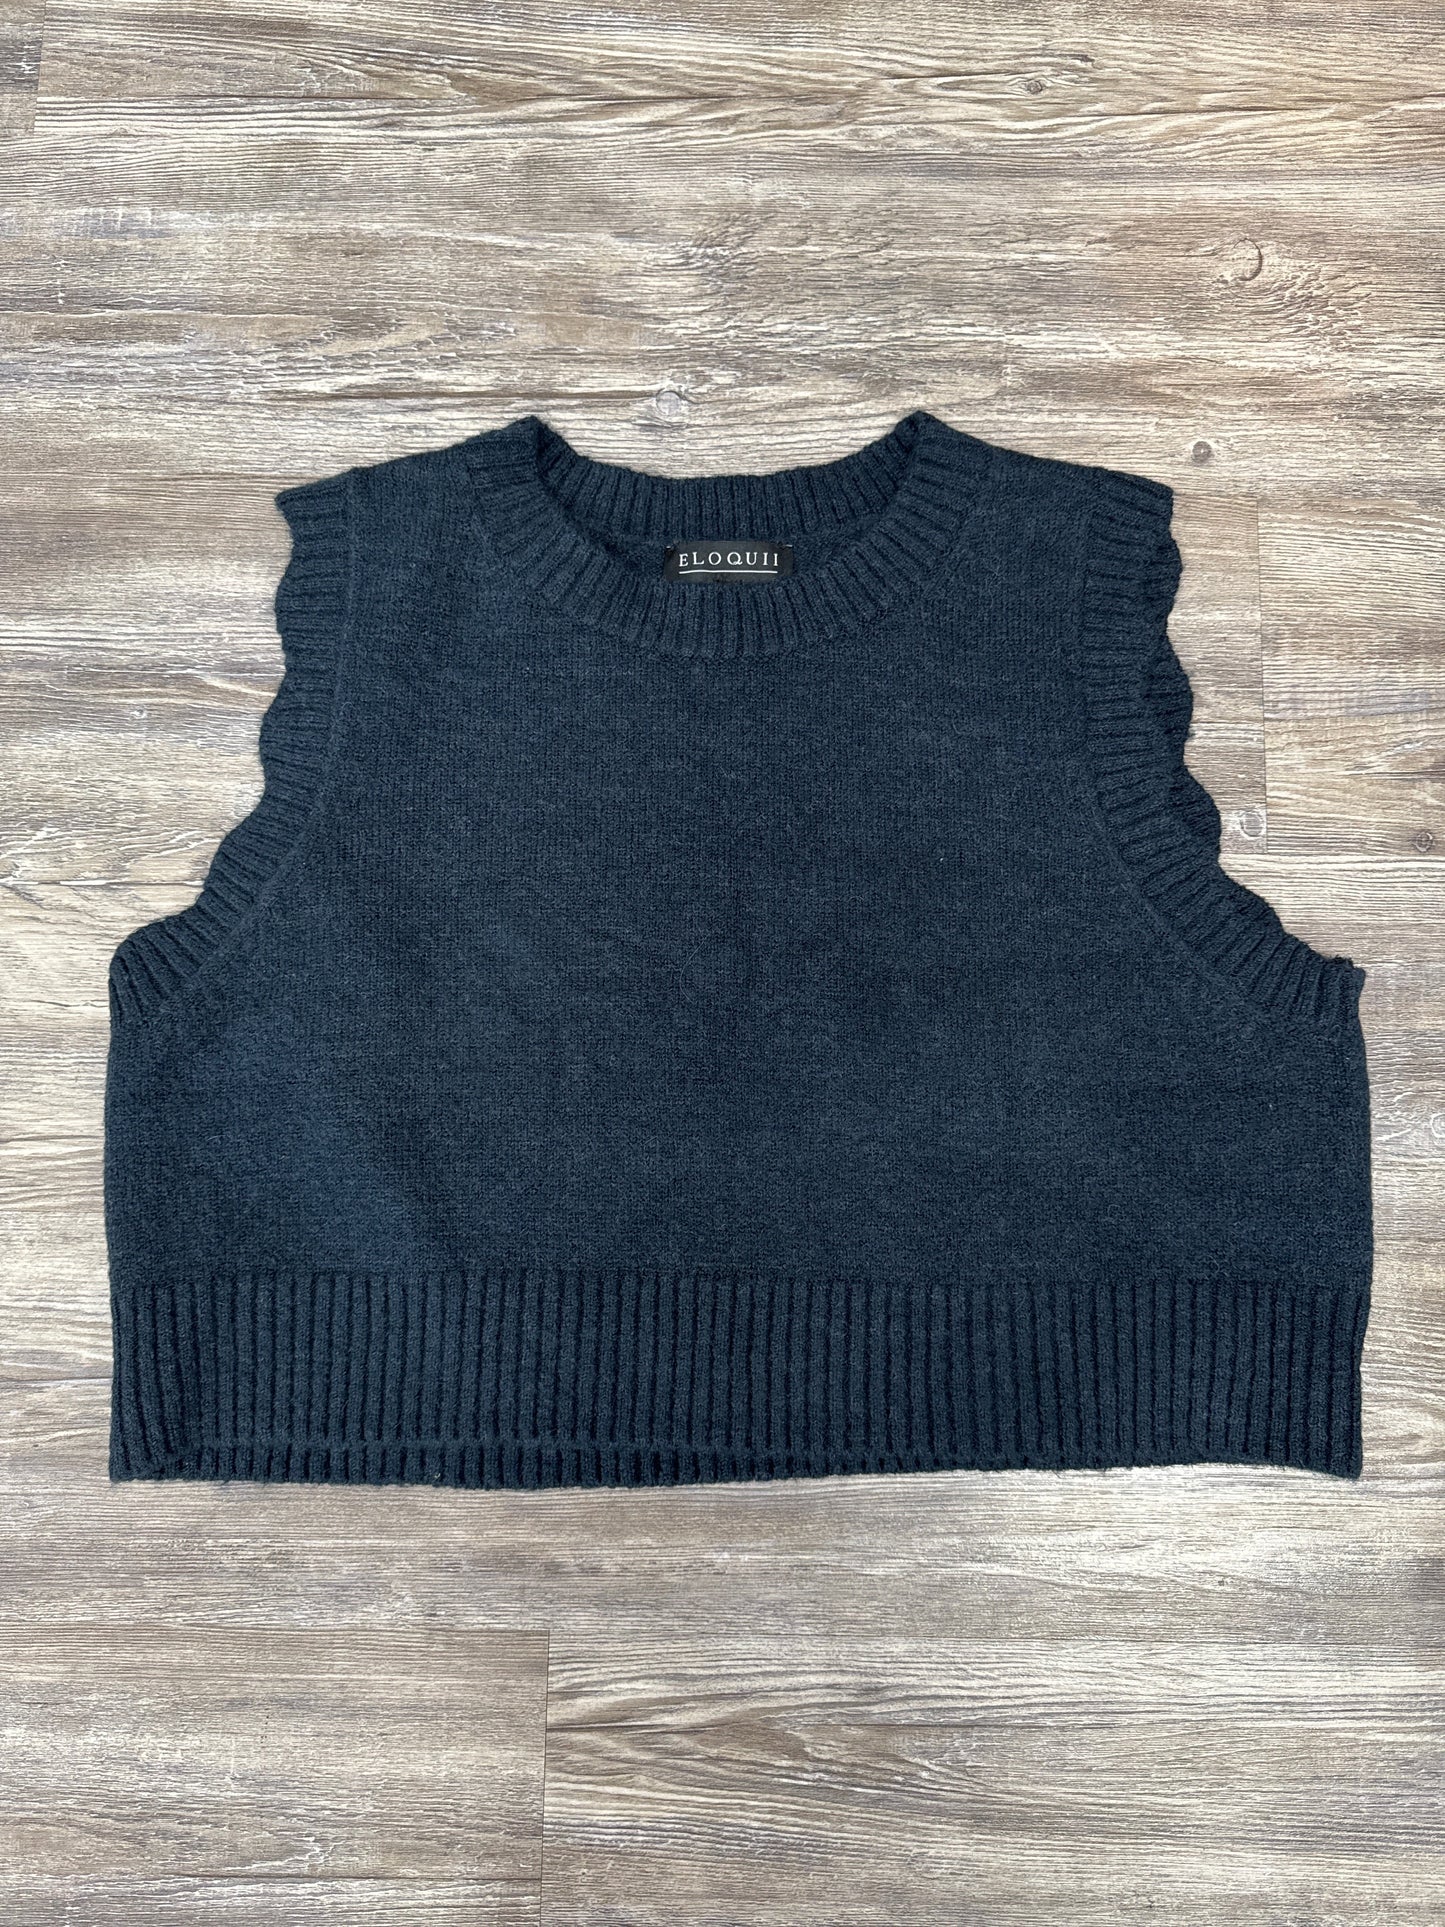 Blue Sweater Short Sleeve Eloquii, Size 1x